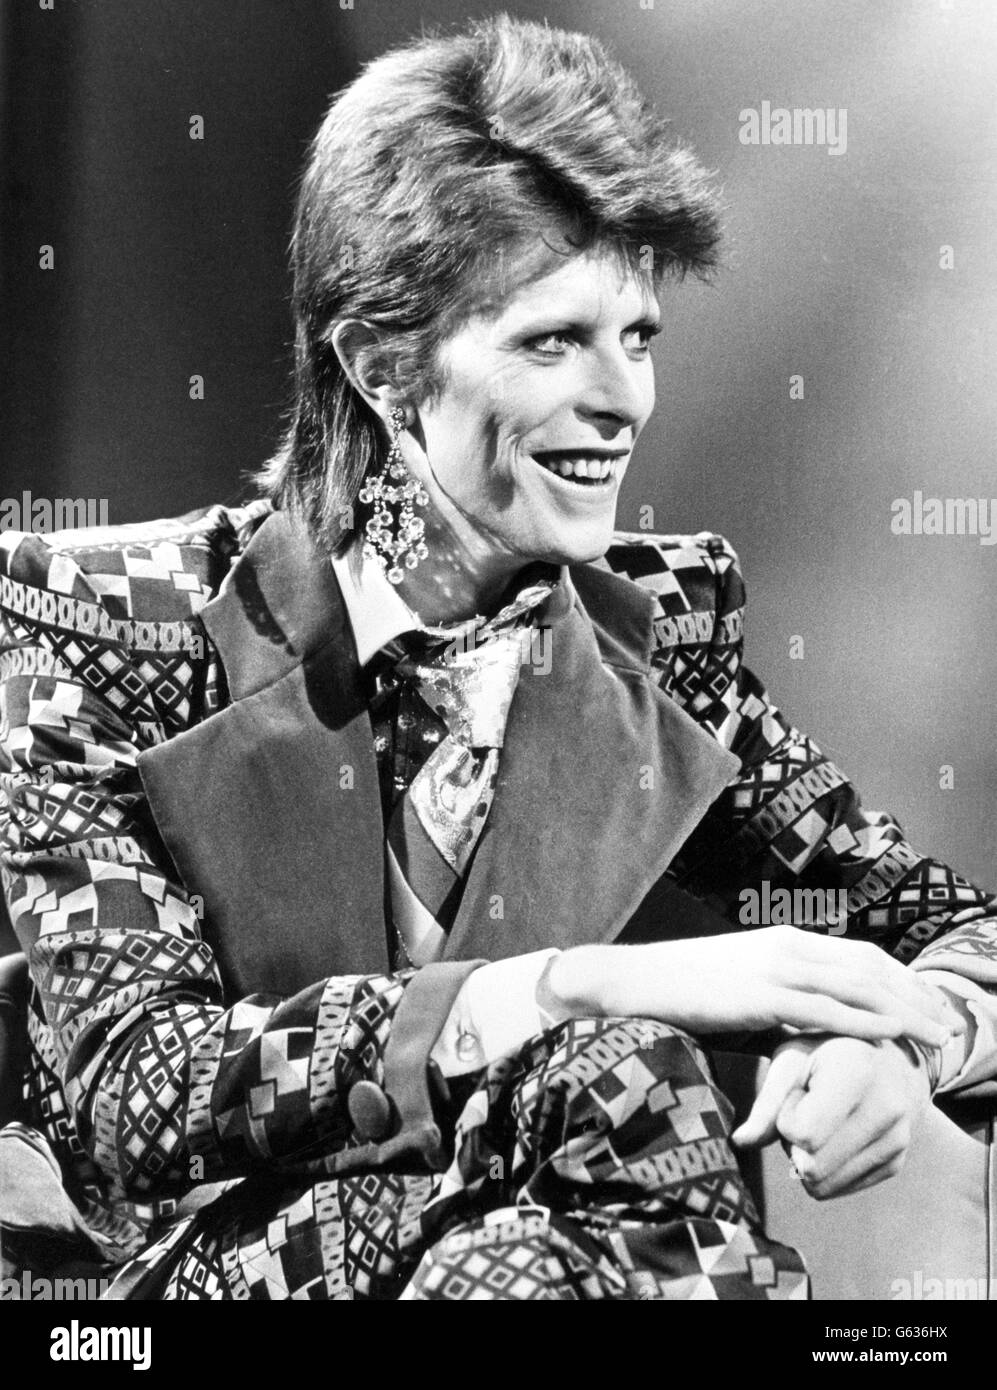 Music - David Bowie. DAVID BOWIE. Stock Photo